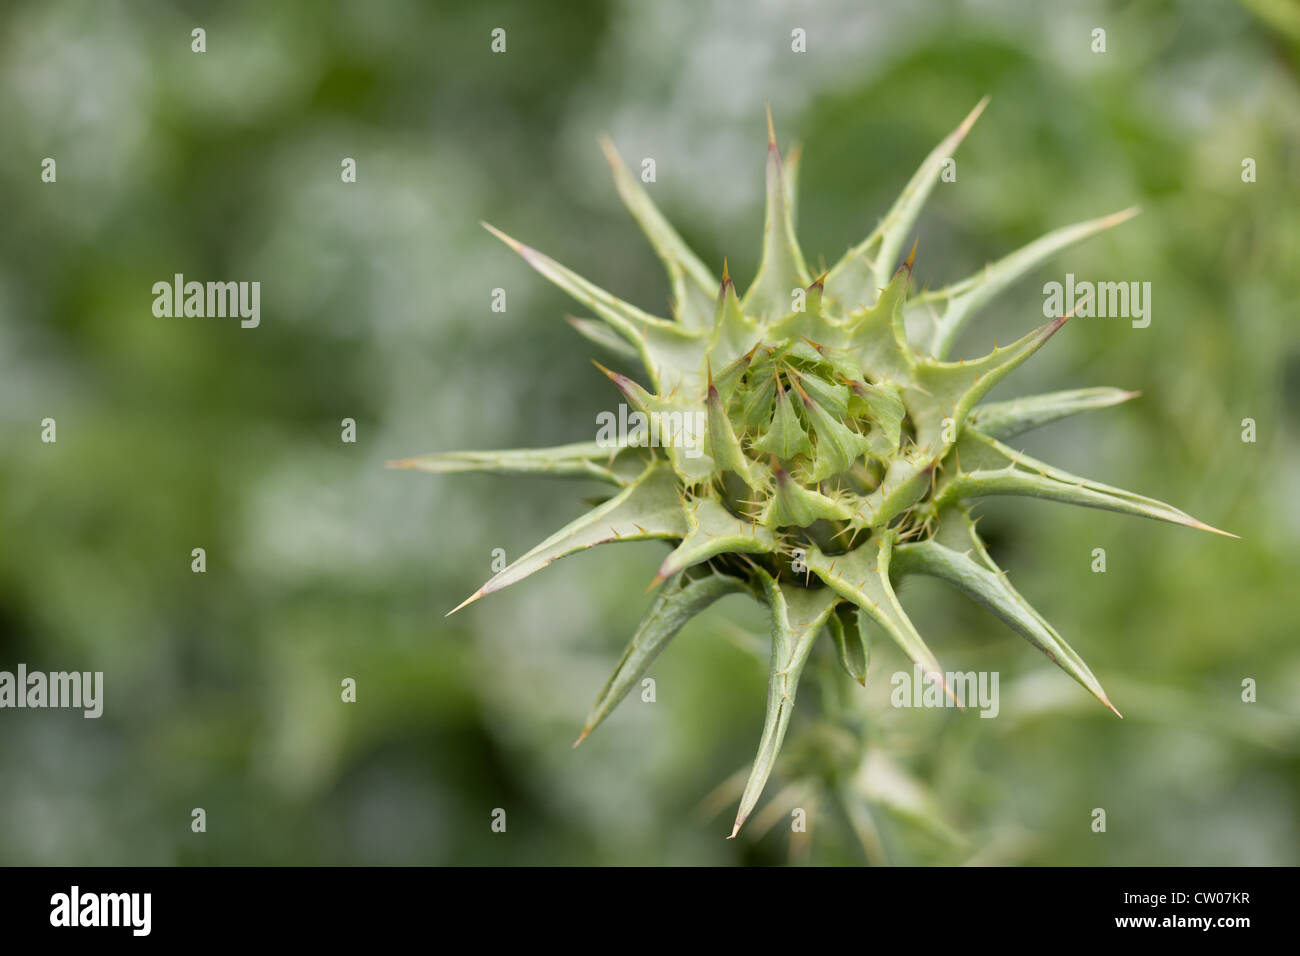 Marian thistle (Silybum marianum) healing plant Stock Photo